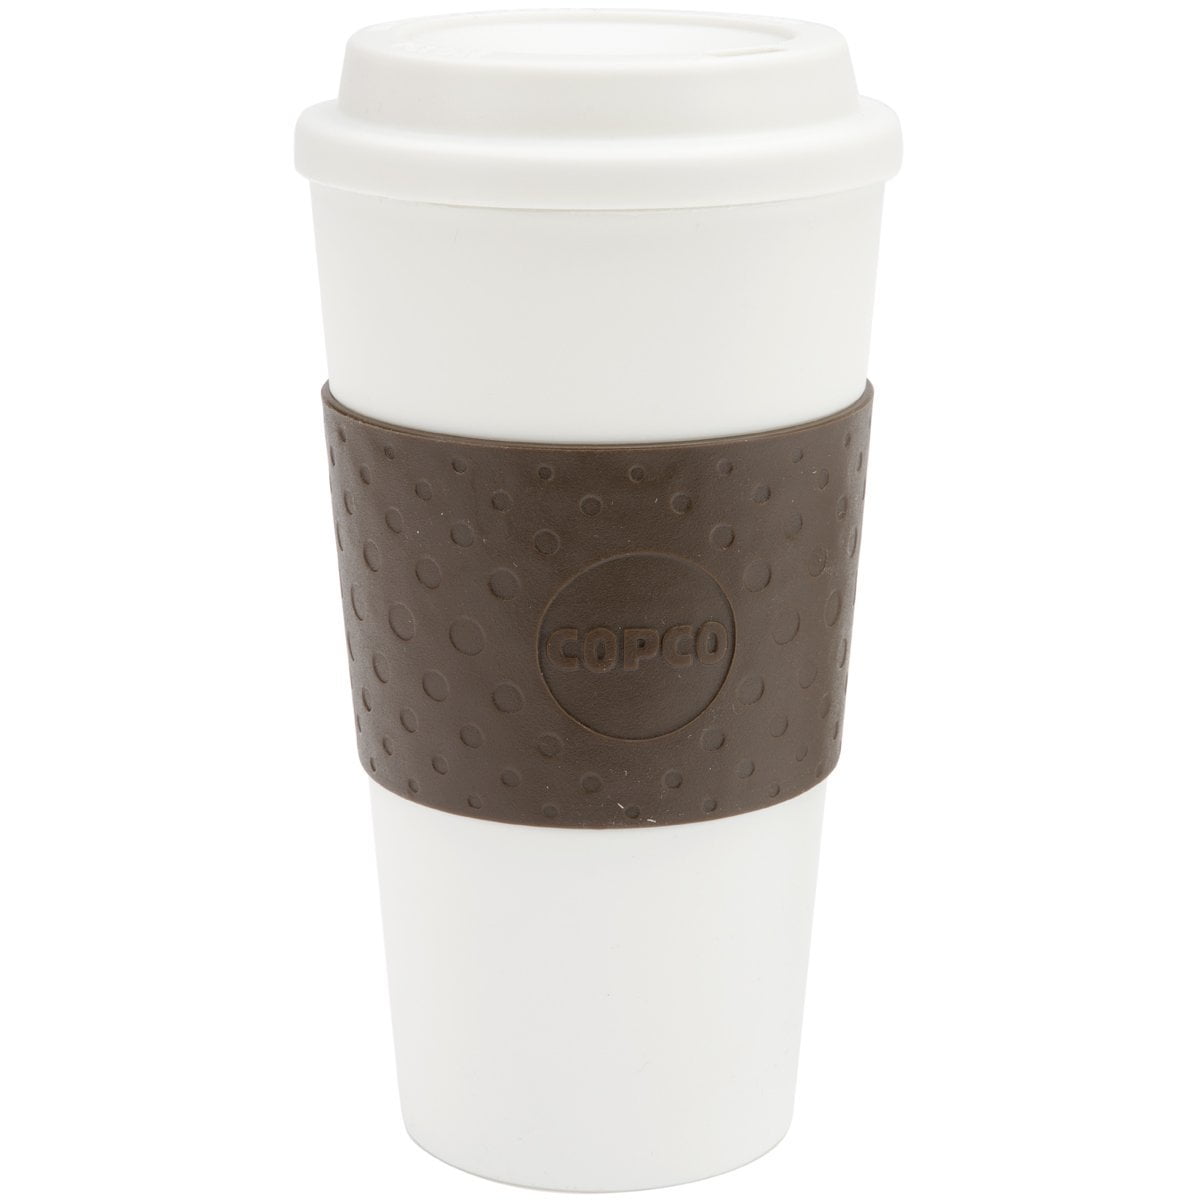 Copco Acadia Reusable 16-Ounce Travel Coffee Mug, Snowflake Blue